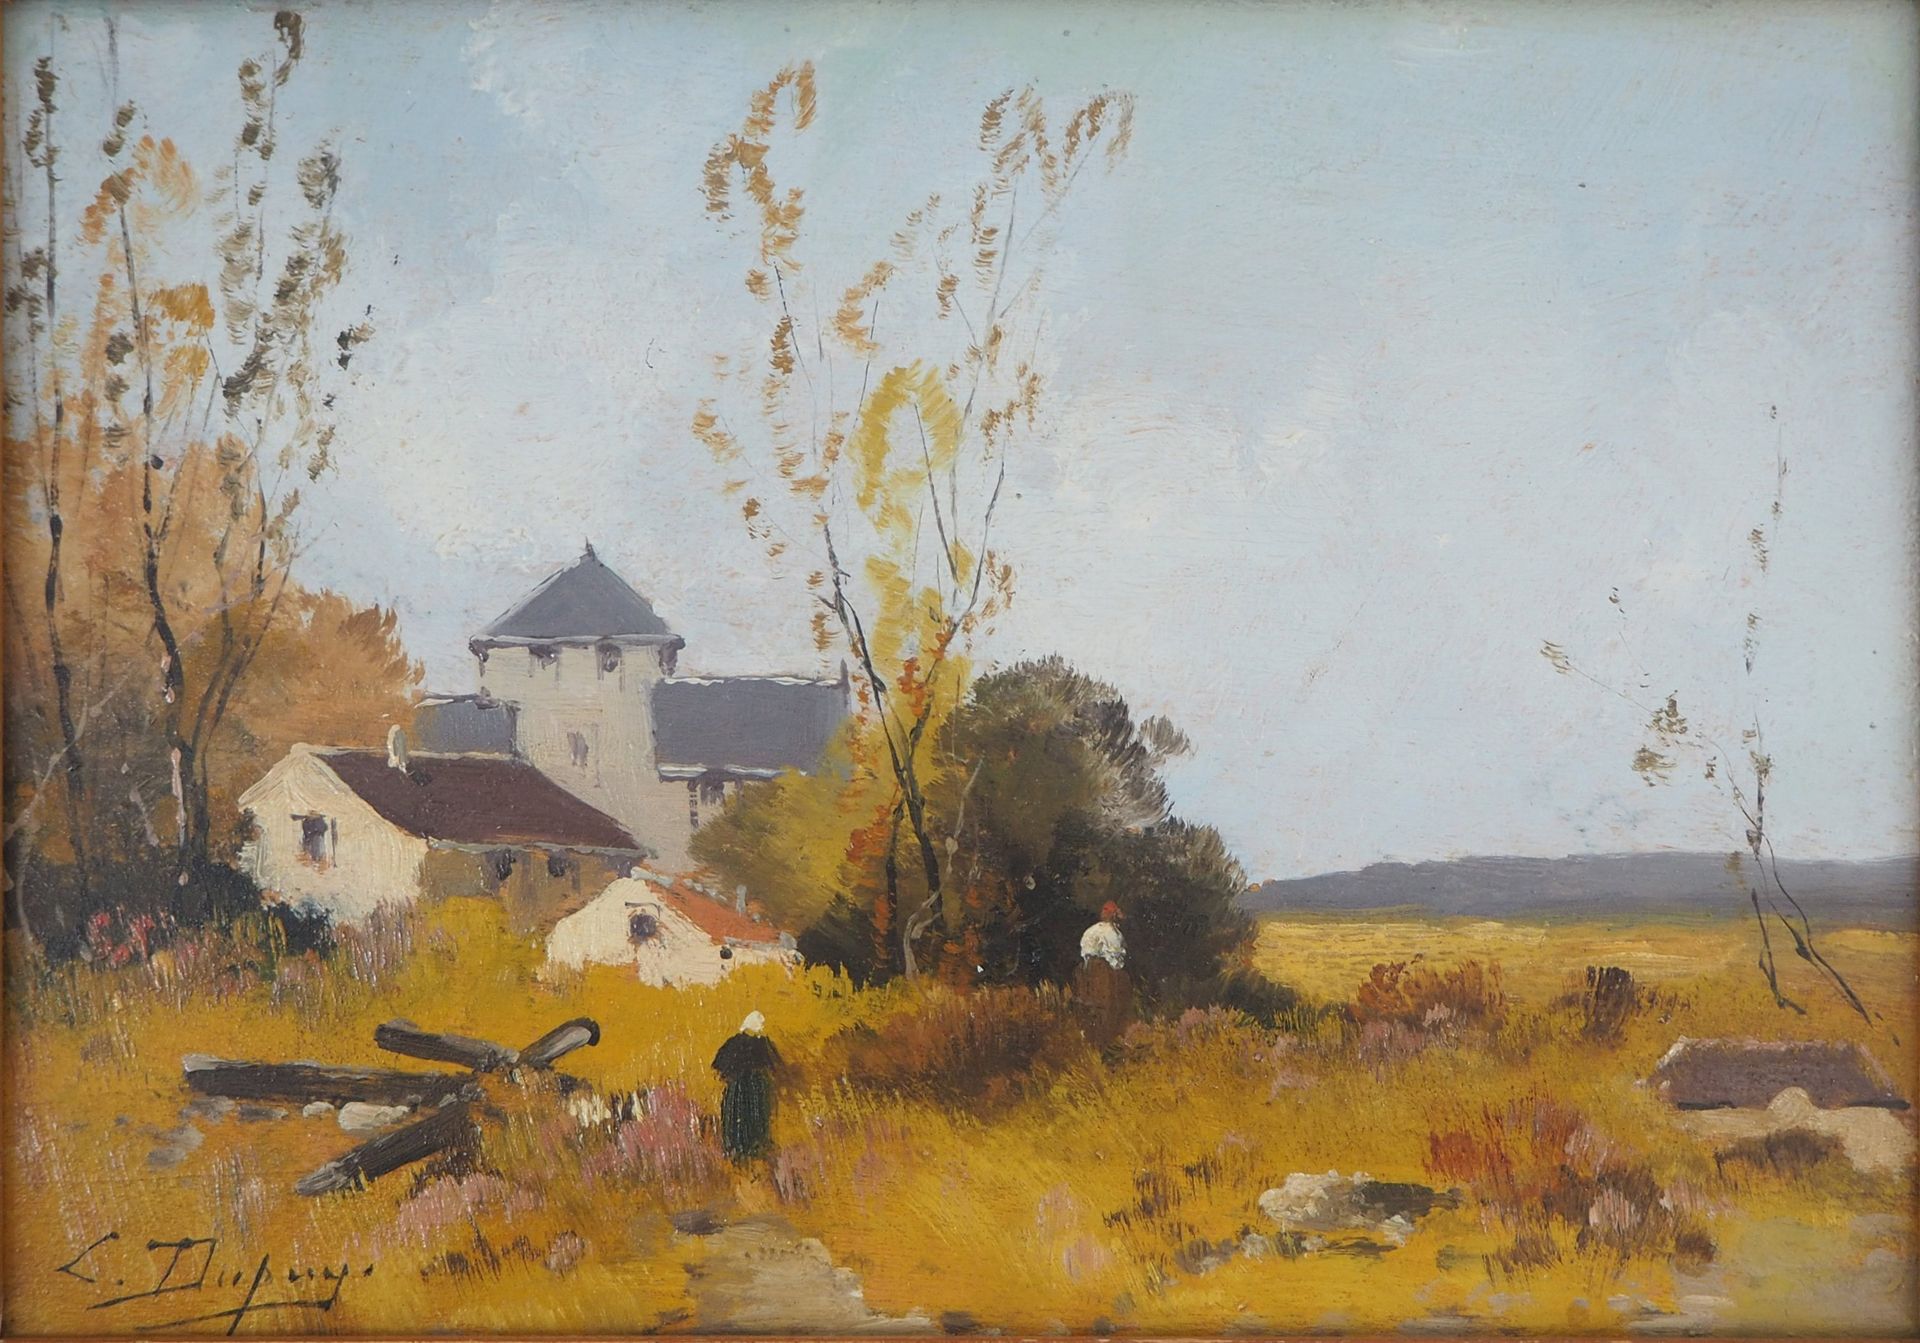 Eugène GALIEN-LALOUE Eugène Galien-Laloue (1854-1941)

Bauernhof im Herbst

Öl a&hellip;